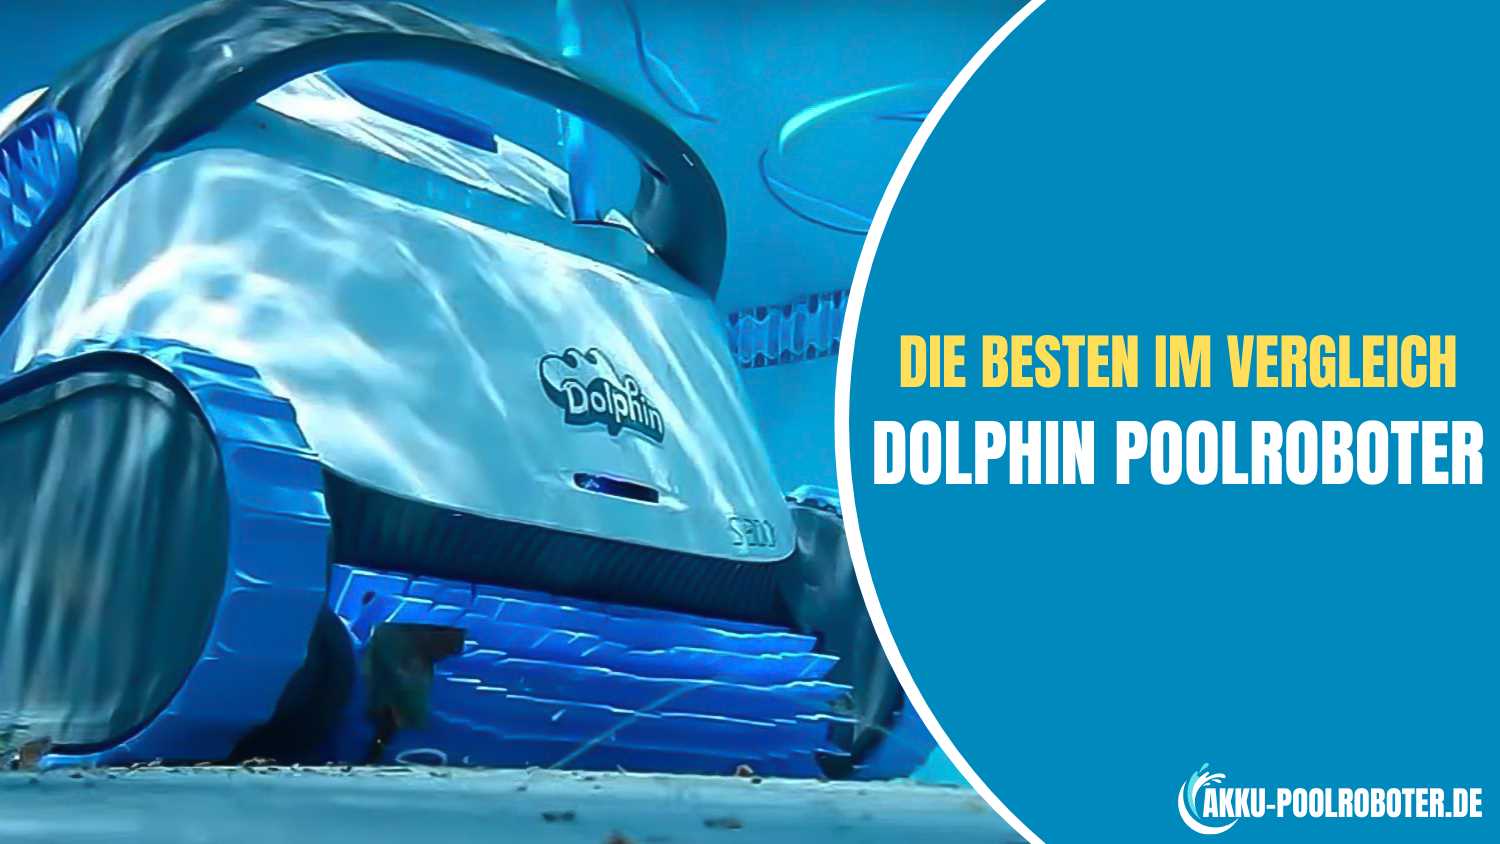 Dolphin Poolroboter Vergleich